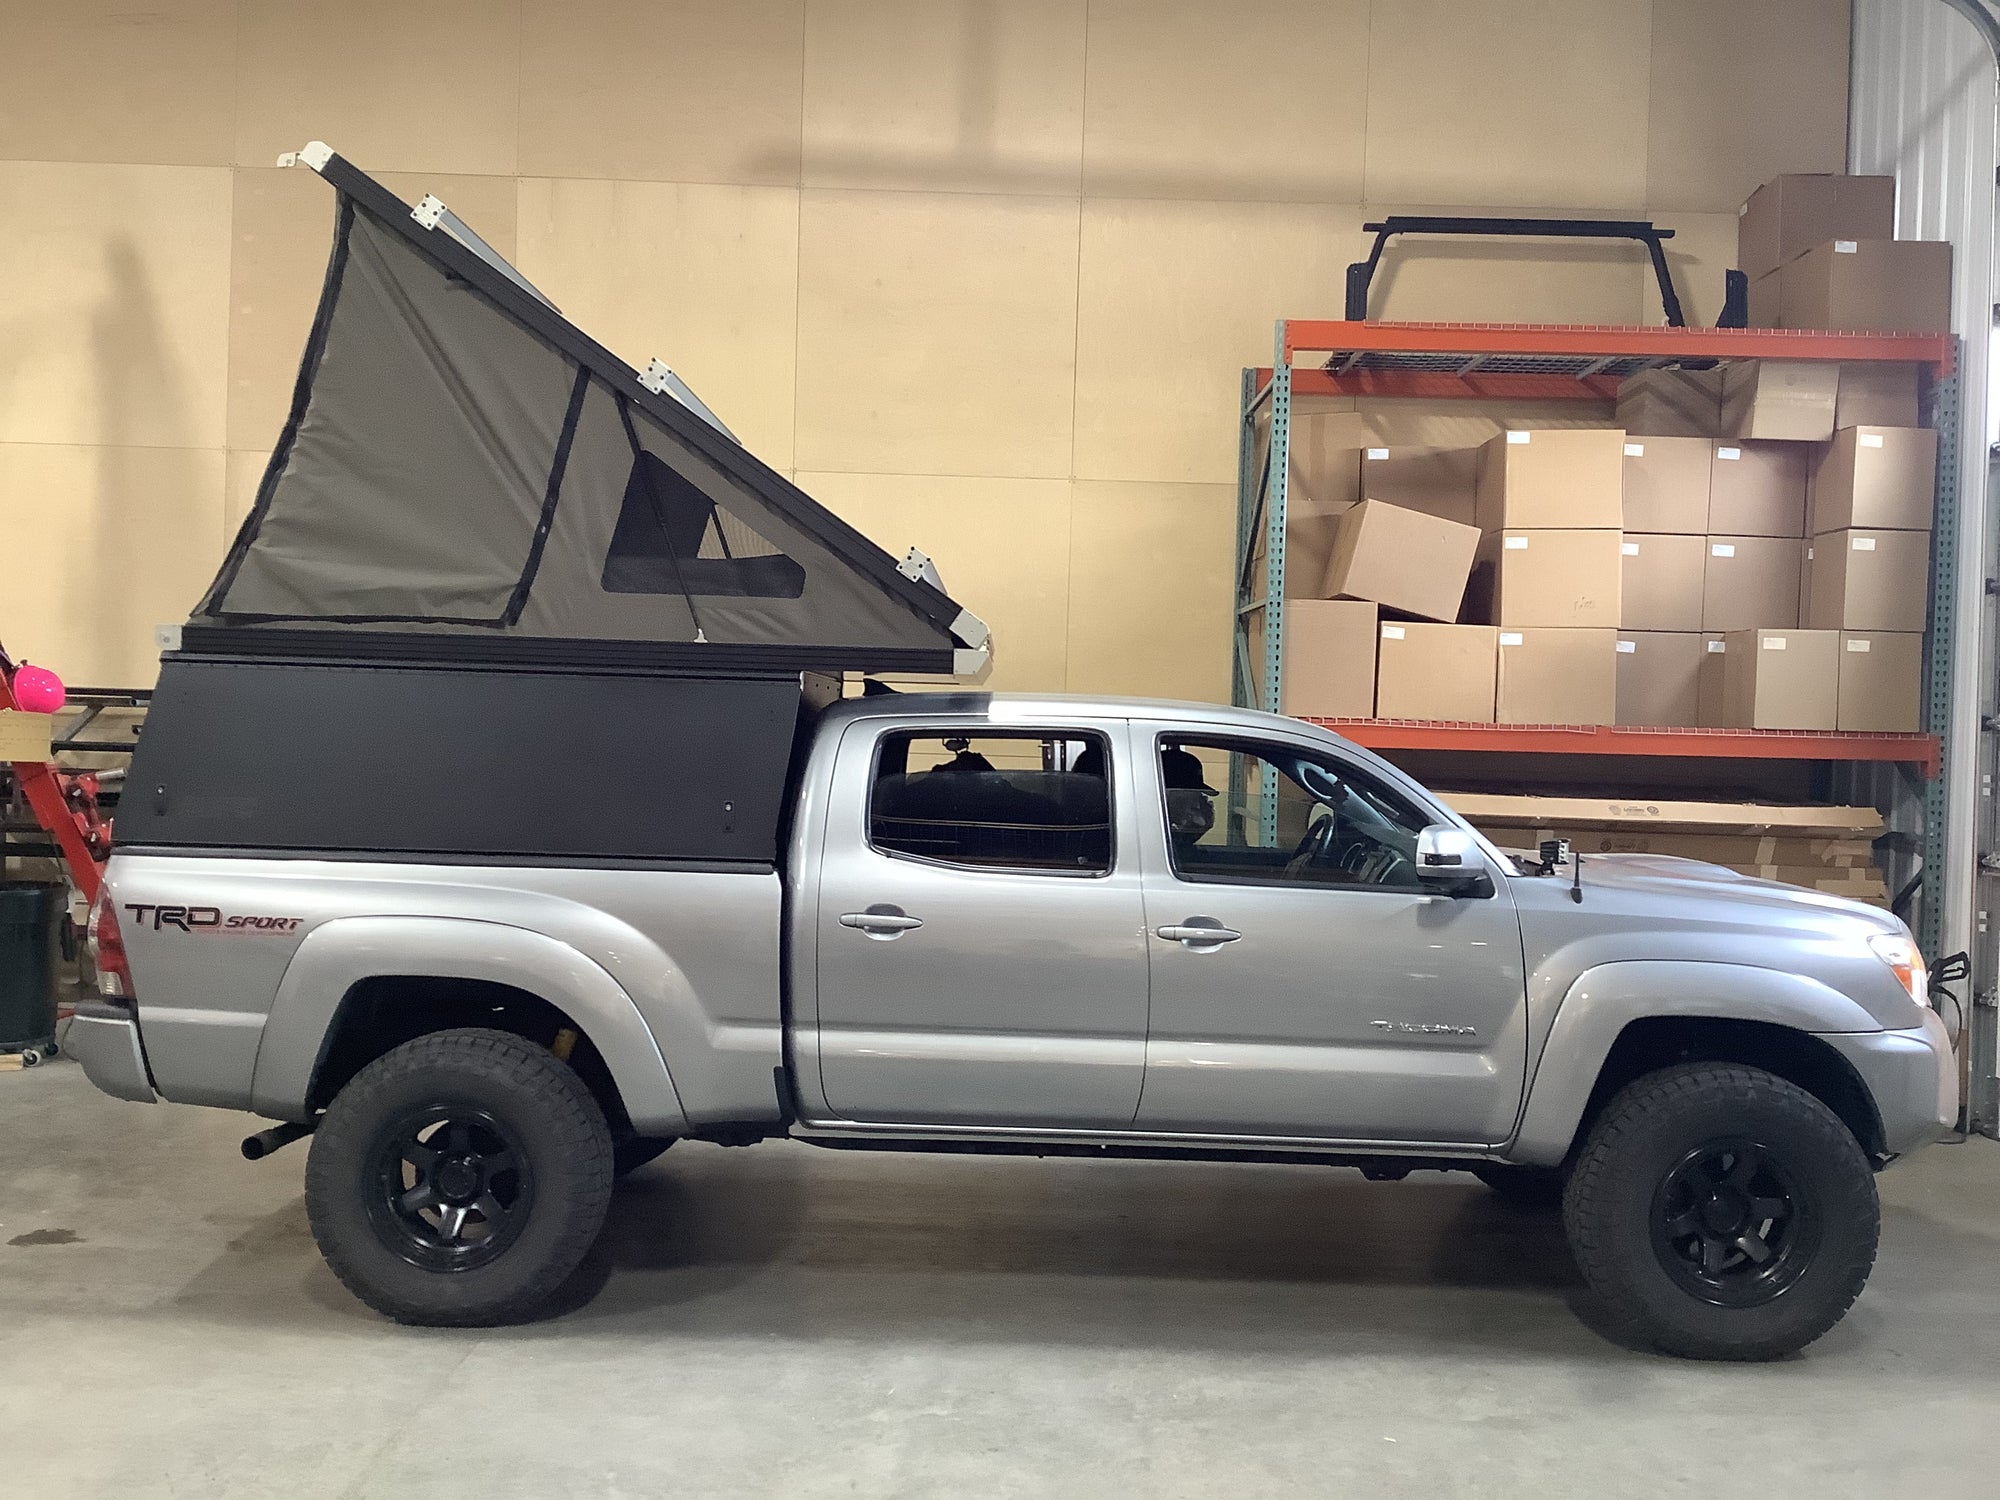 2014 Toyota Tacoma Camper - Build #3008 - GoFastCampers